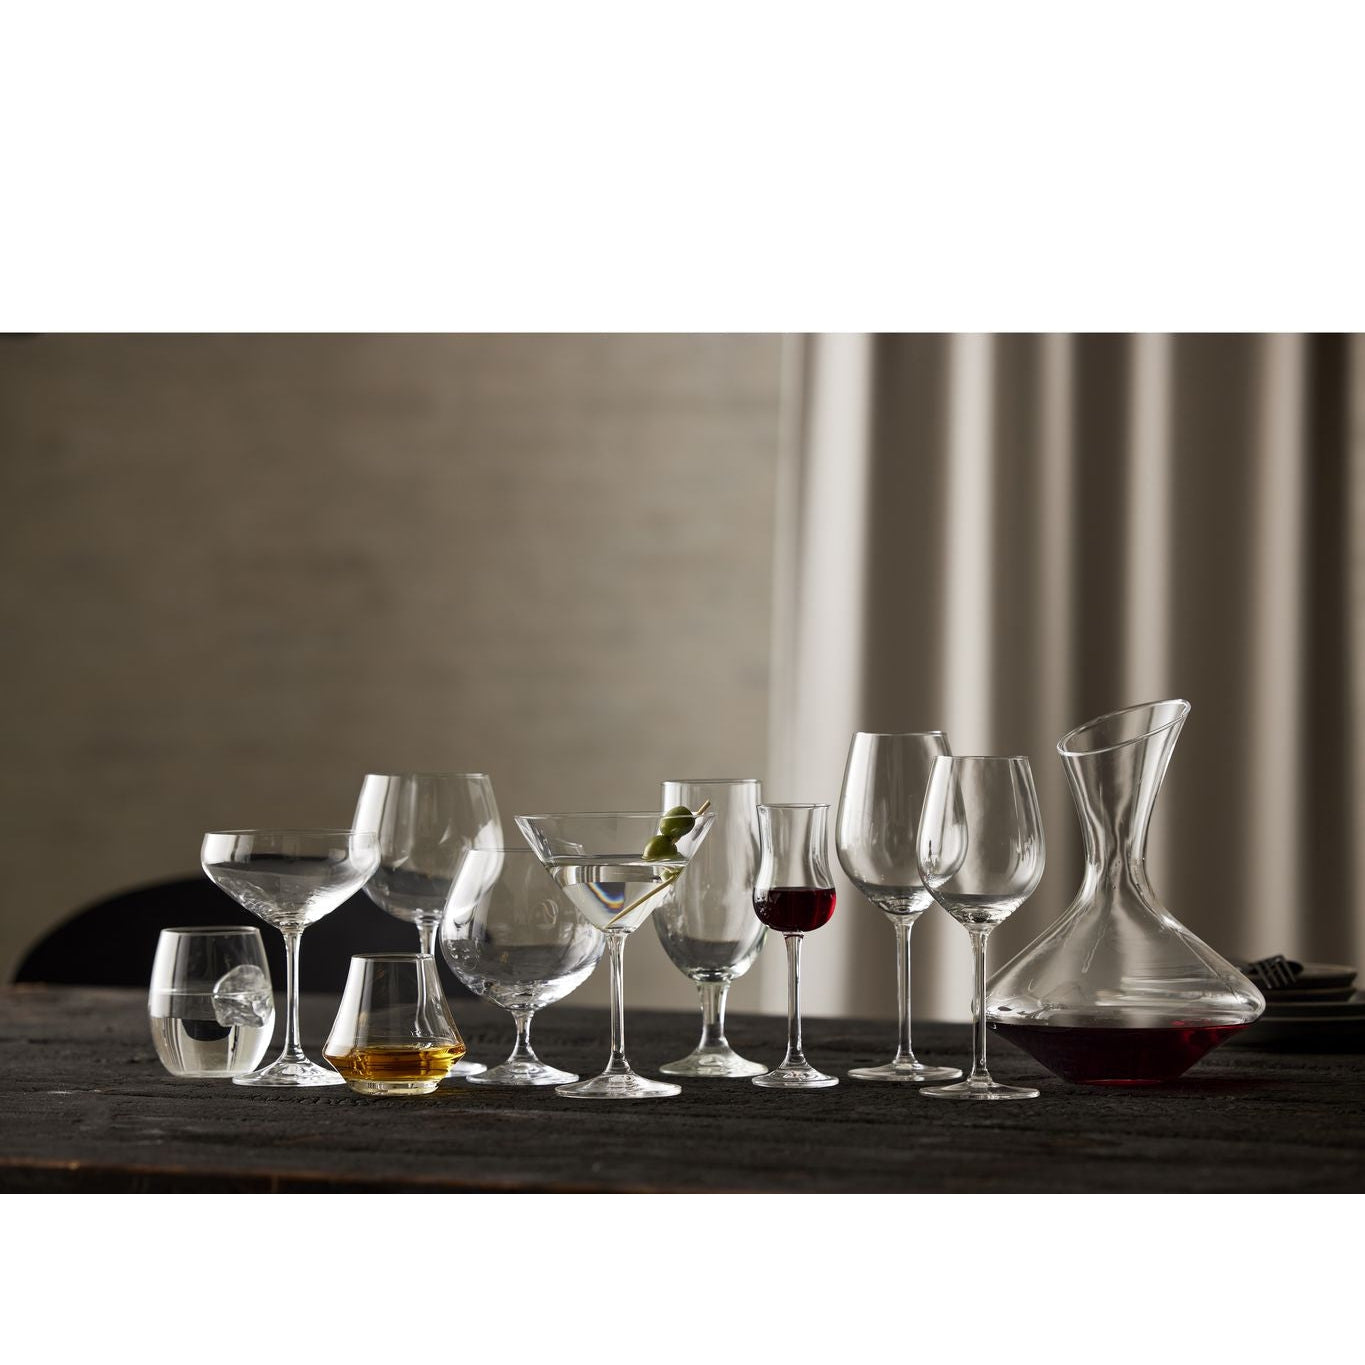 Lyngby Glas Juvel White Wine Glass 38 Cl, 4 stk.